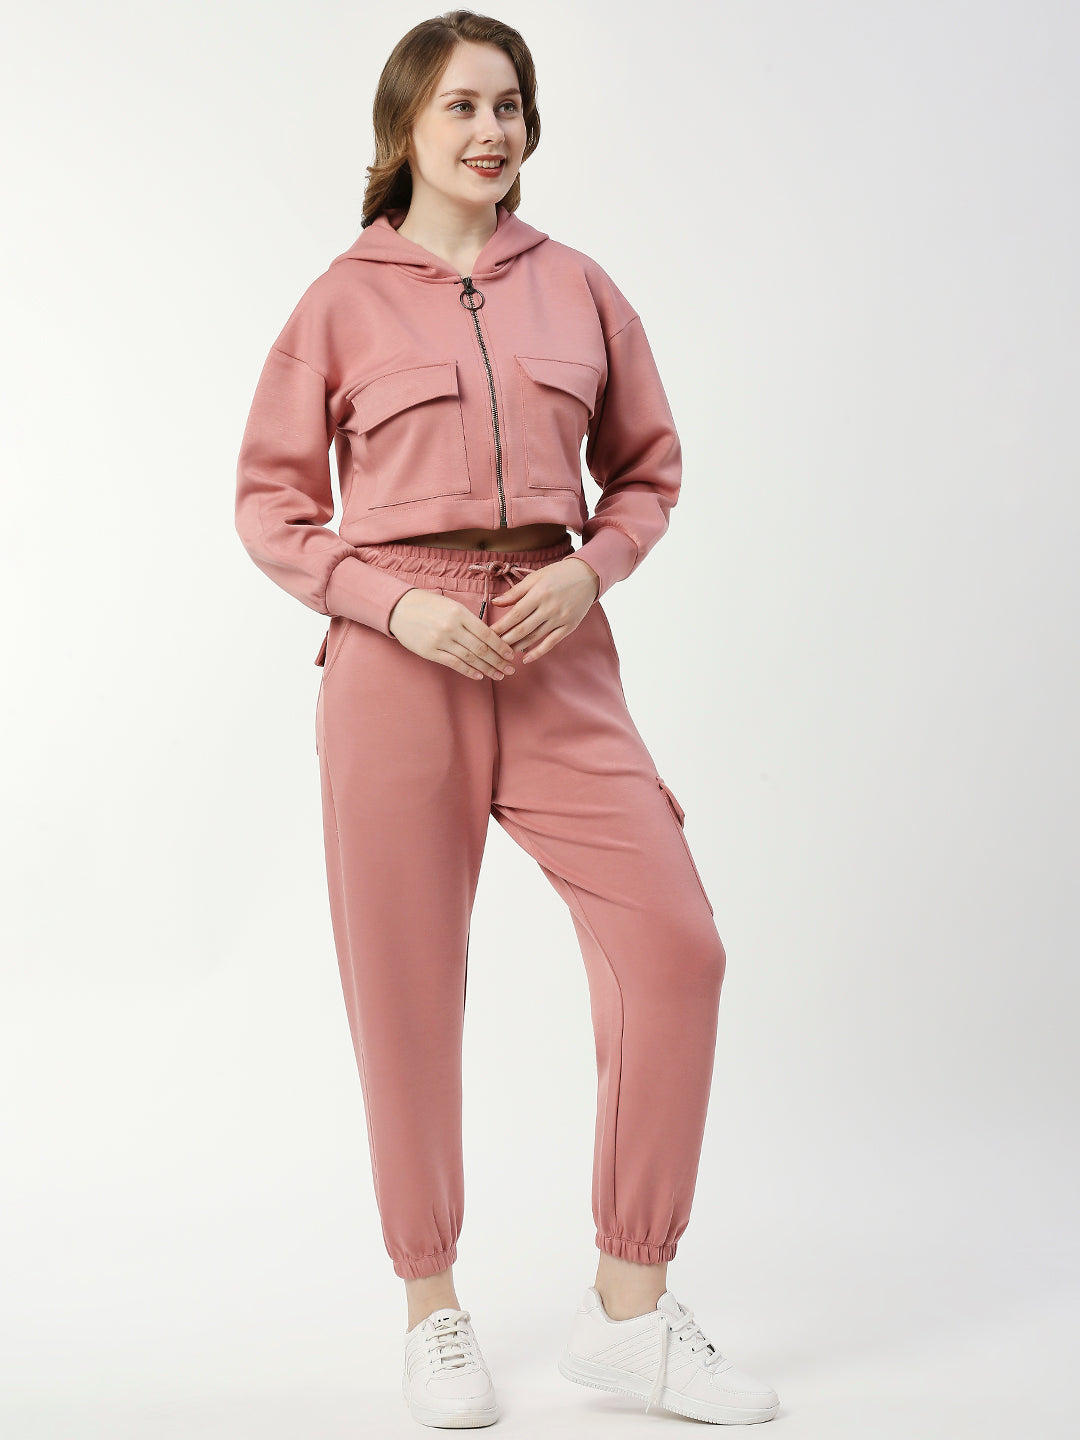 Buy Blamblack Women's Powder Pink Color Co-ordinates Set